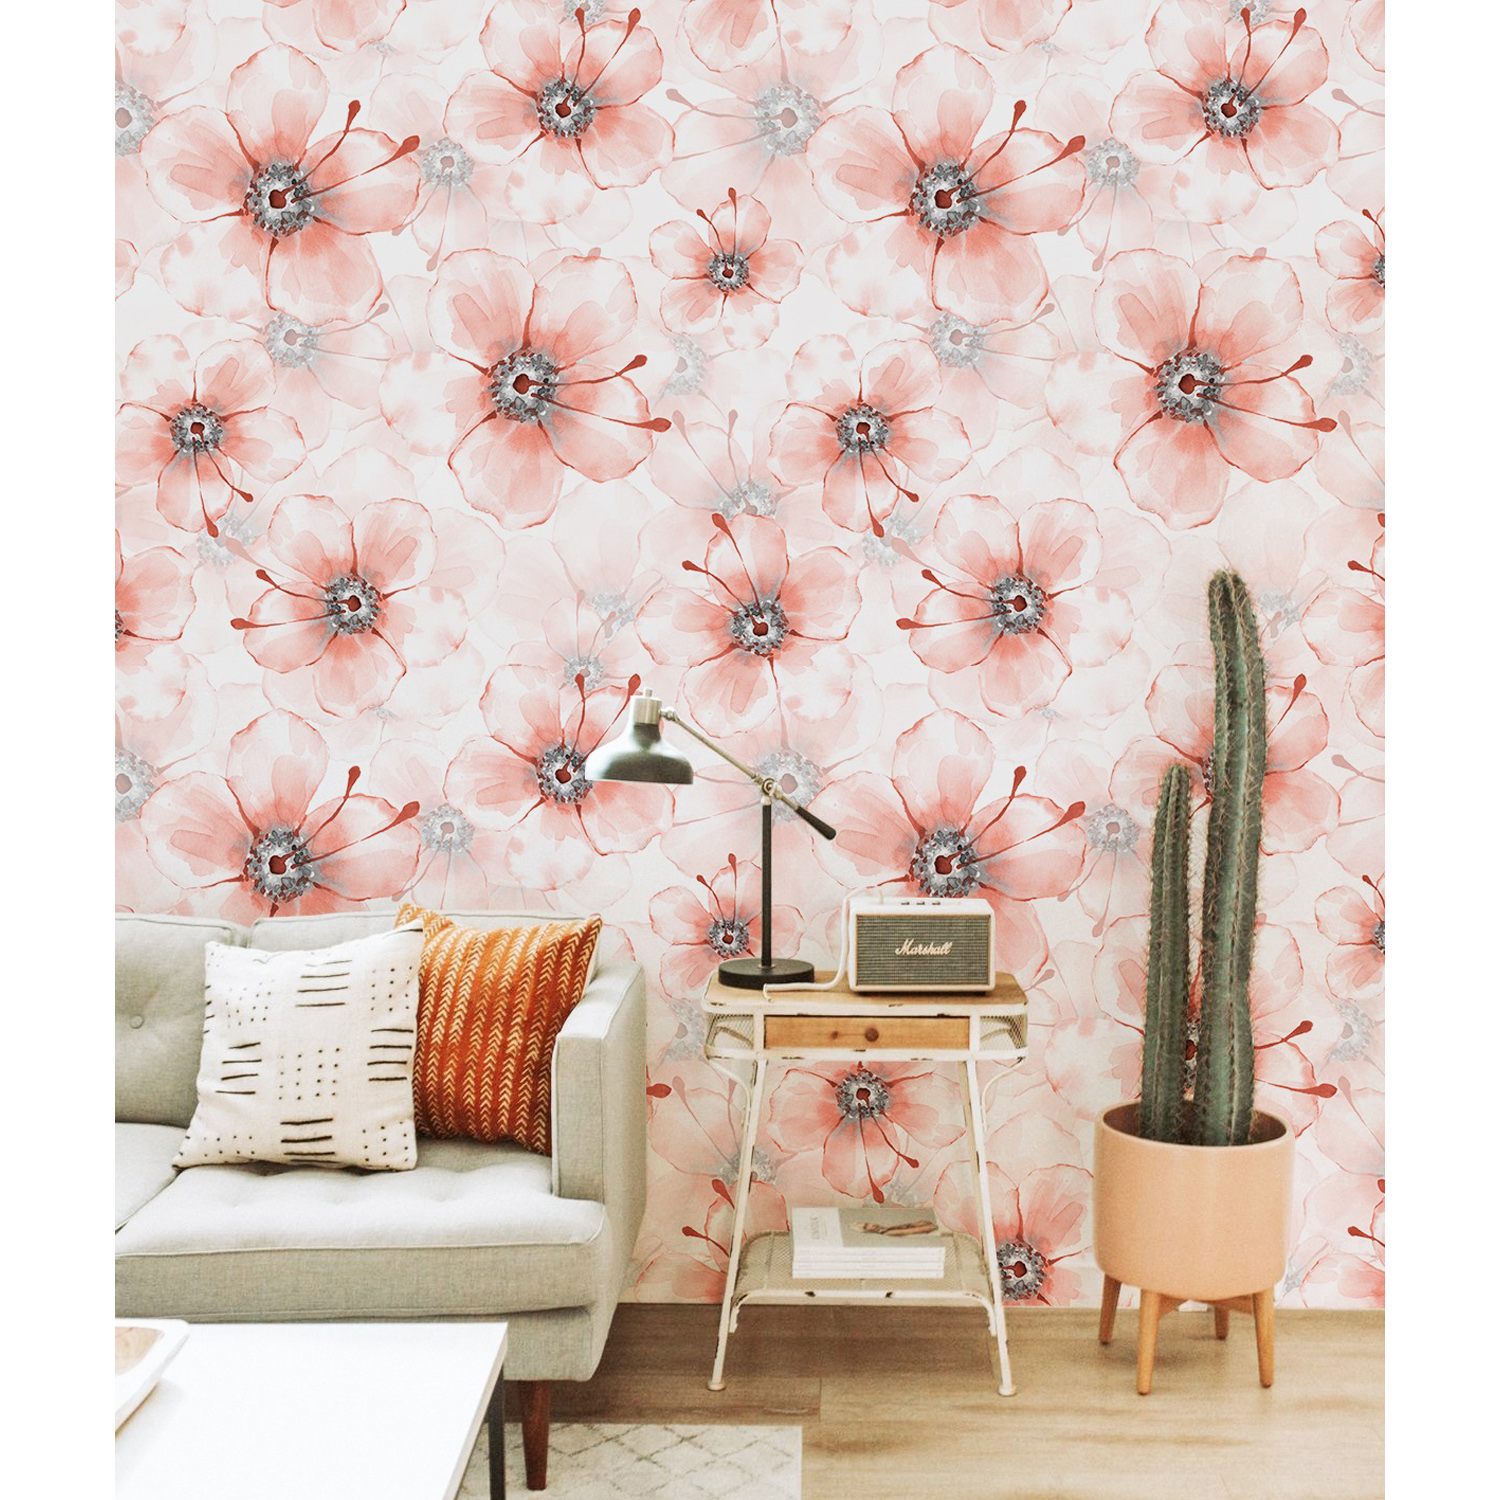 Cactus Living Room Decor - 1500x1500 Wallpaper - teahub.io